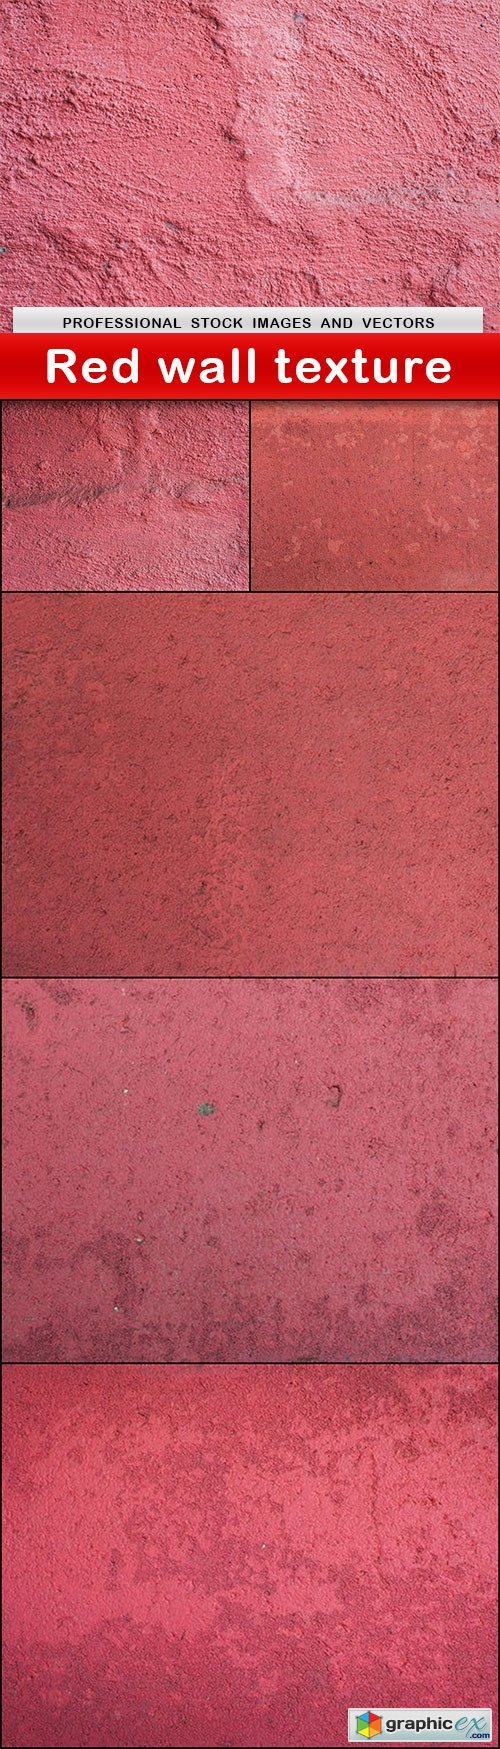 Red wall texture - 6 UHQ JPEG